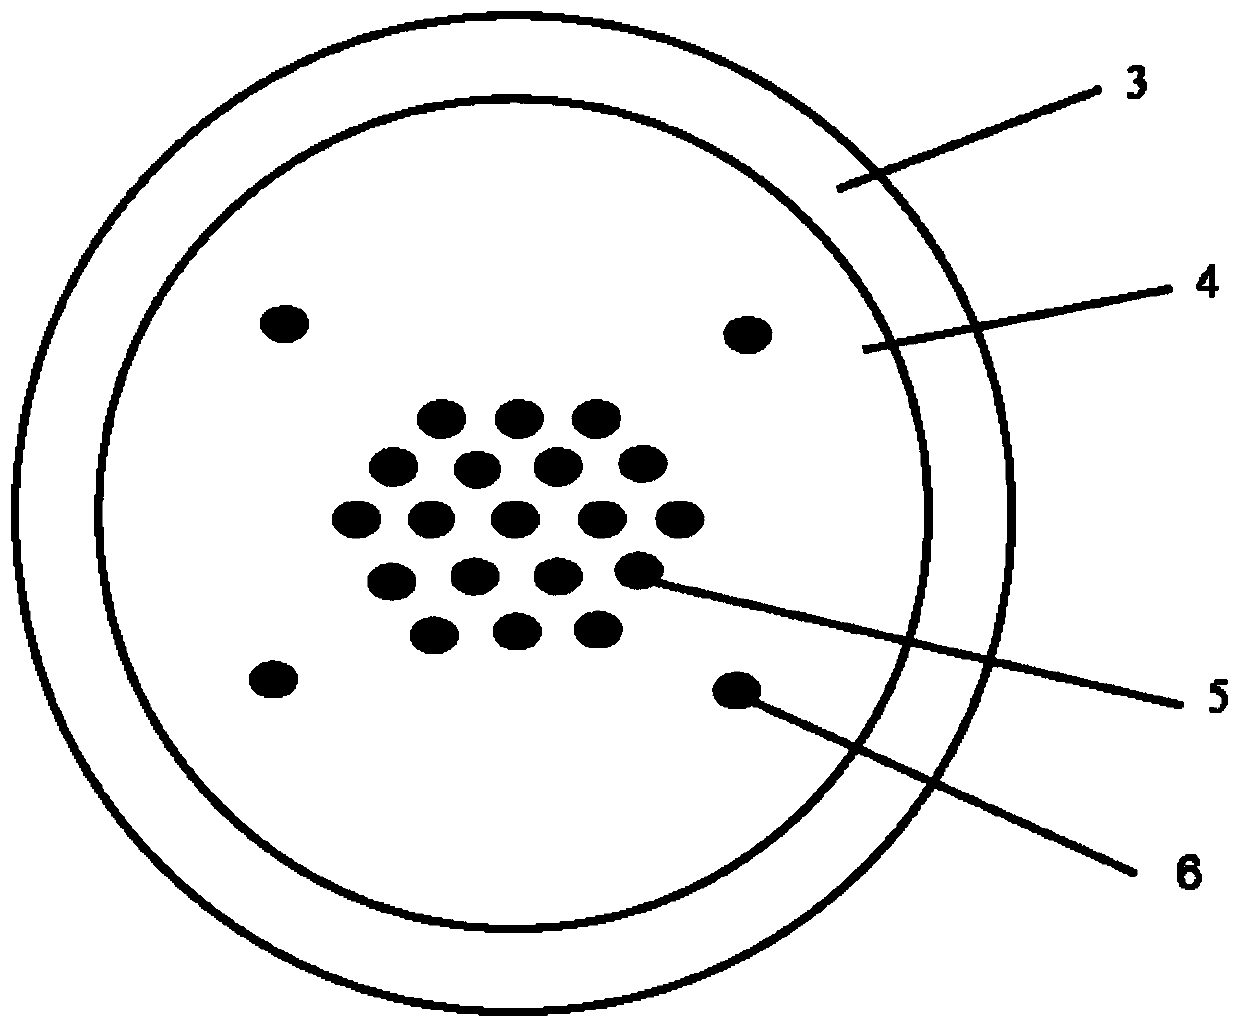 Hemispherical Lens Feed Transceiver Integrated Crescent Lens Antenna